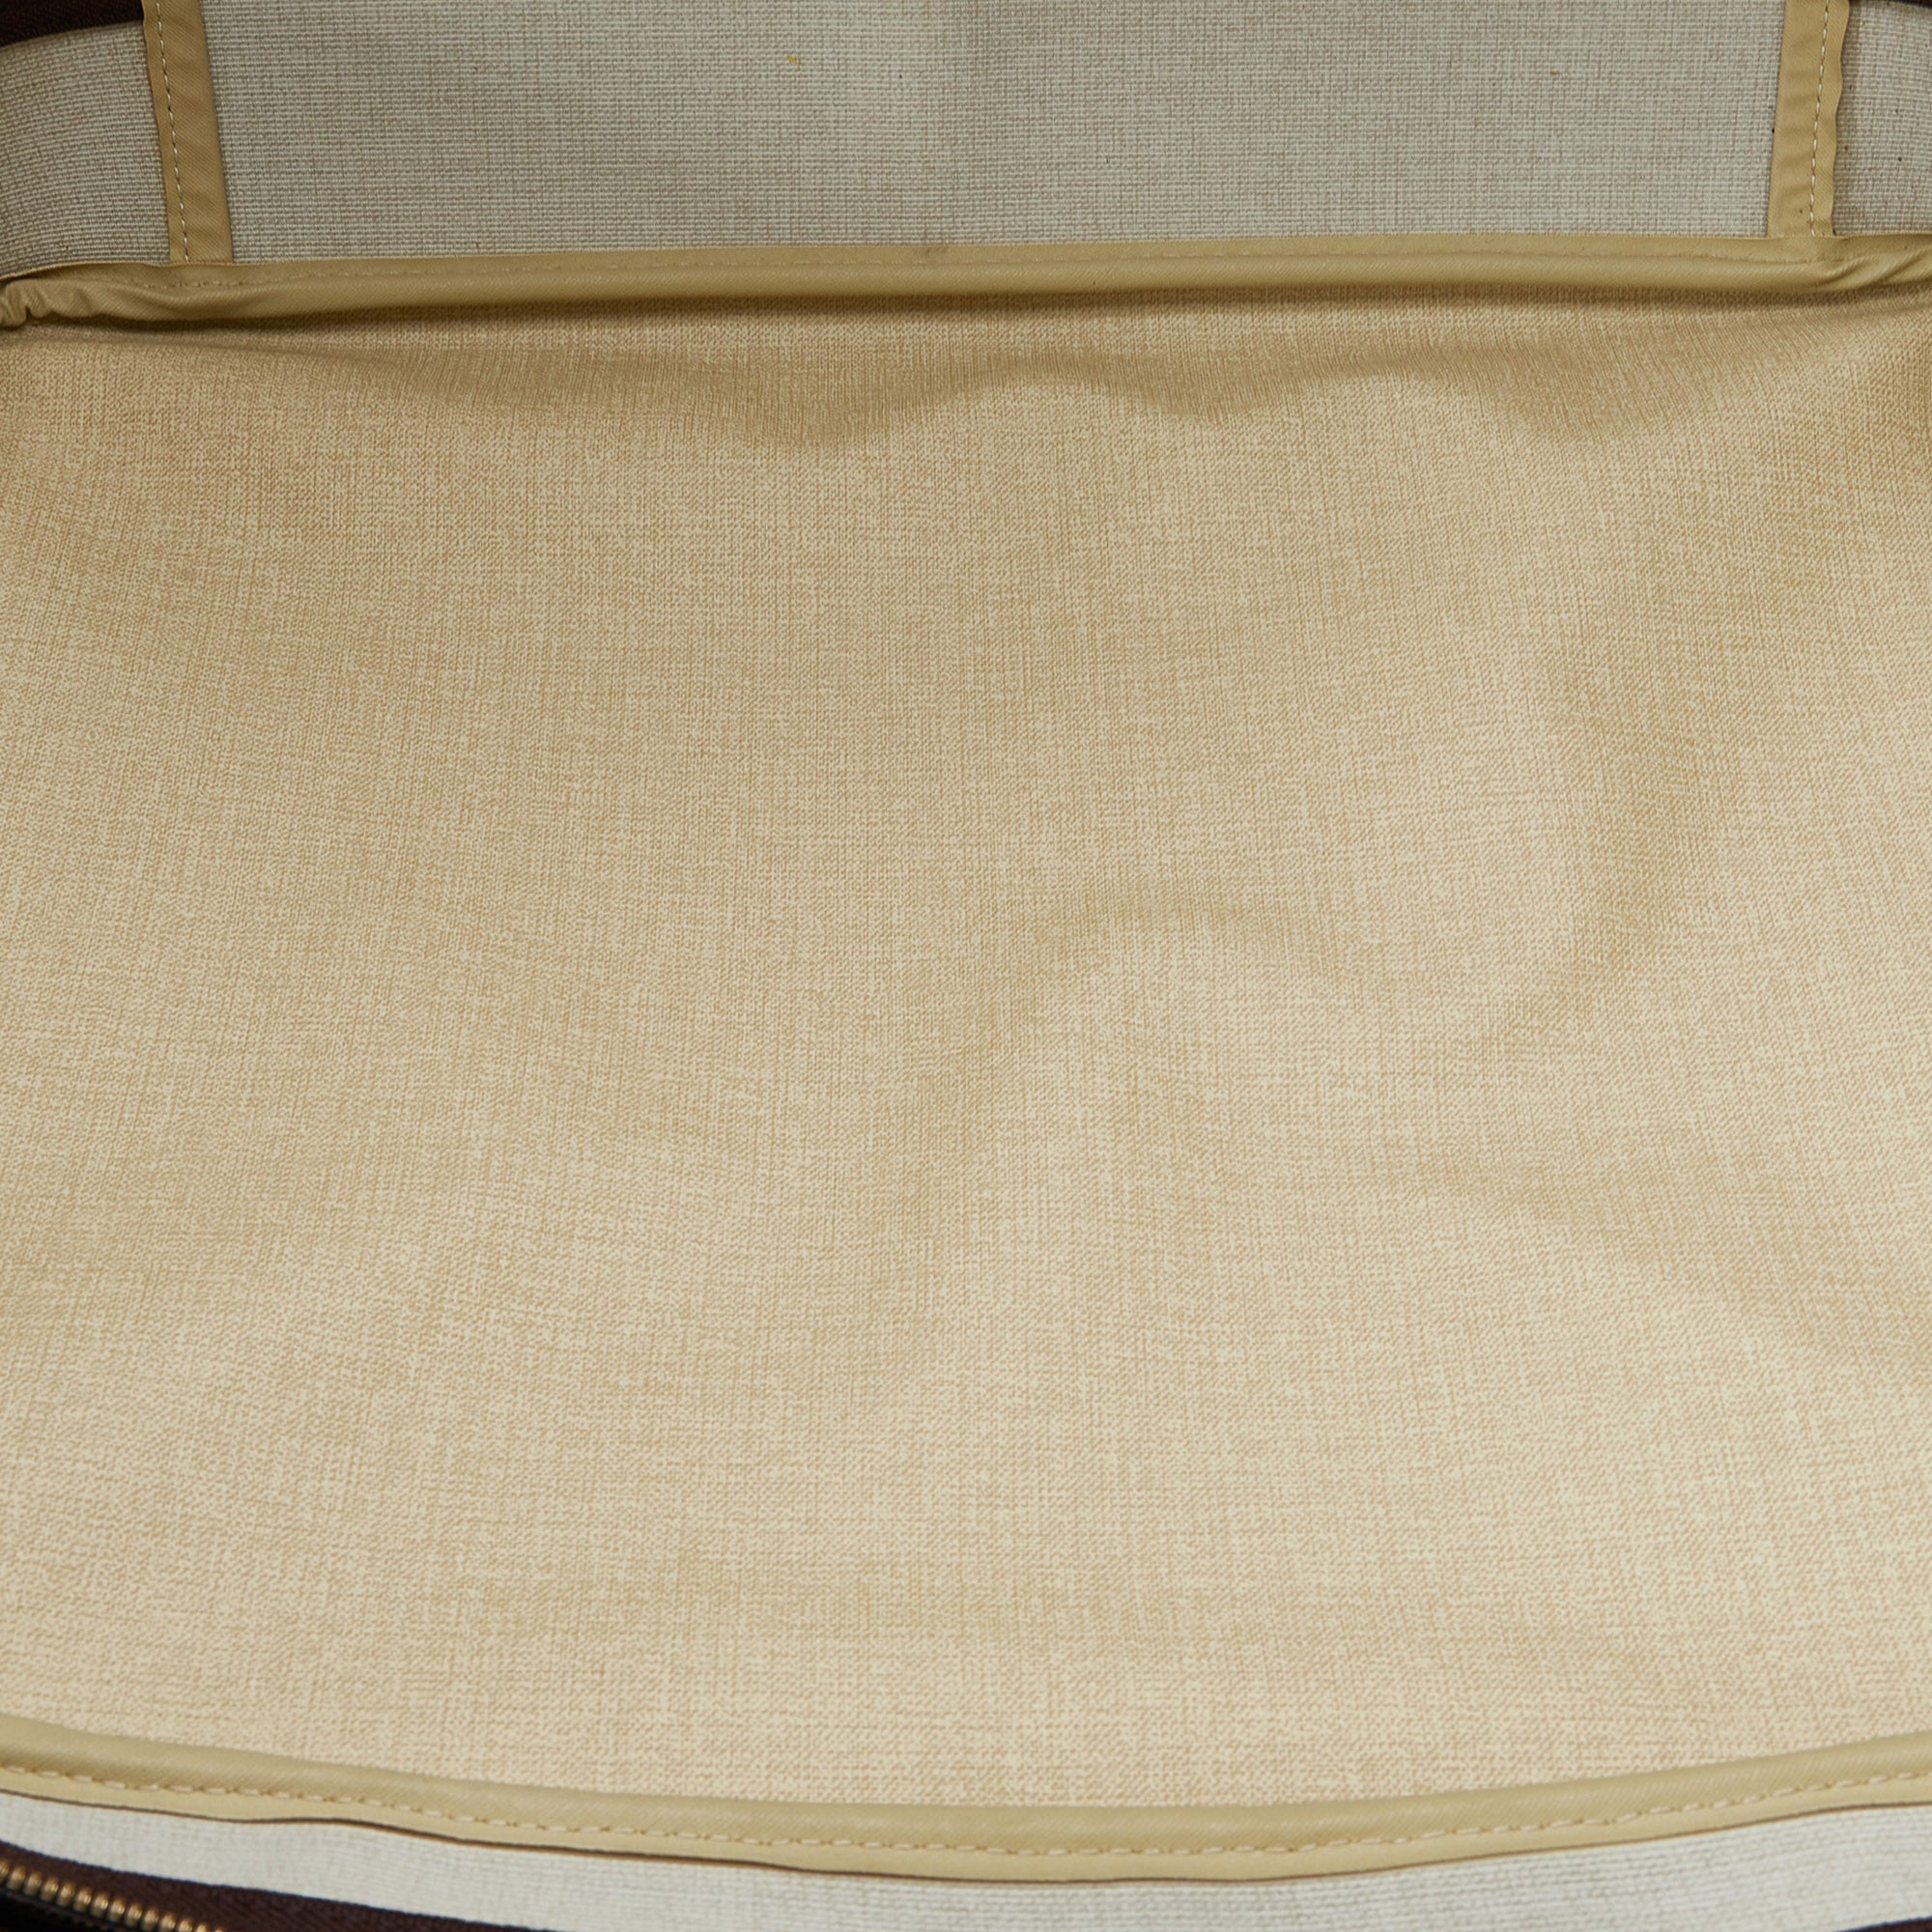 Brown Louis Vuitton Monogram Alize 24 Heures Travel Bag – Designer